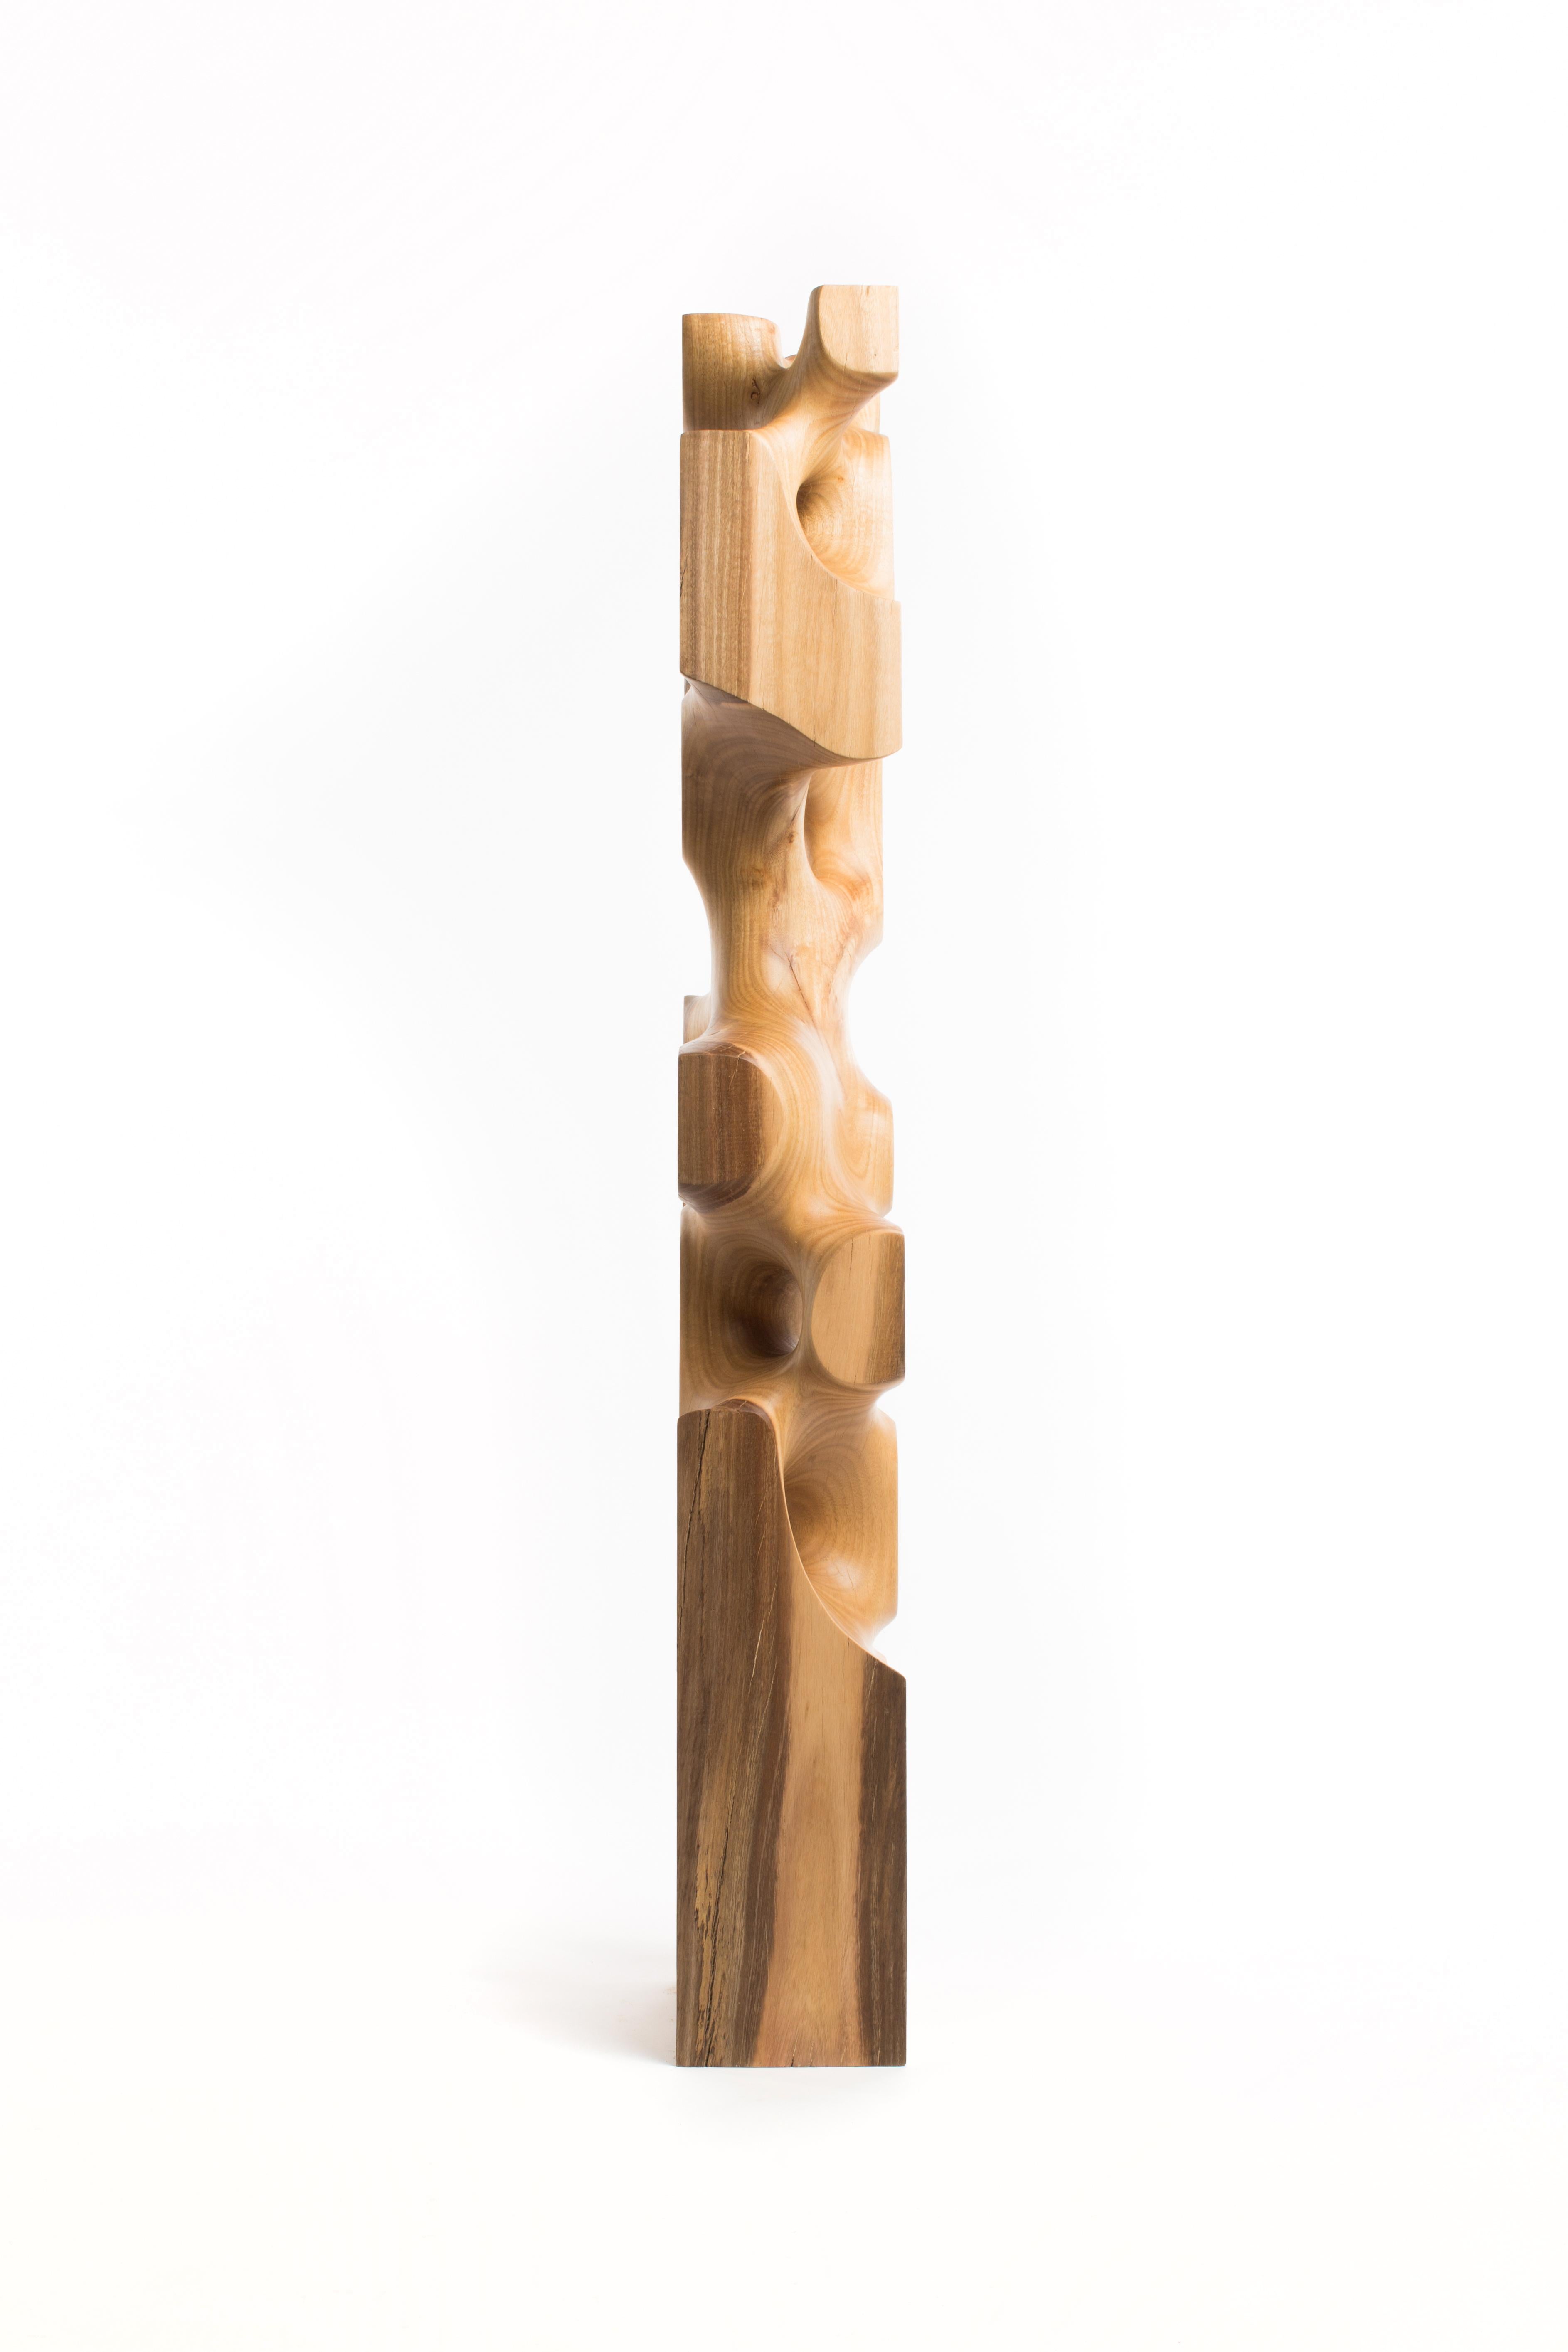 Driaan Claassen for Reticence, Abstract Geometric Sculpture, Wooden Cuboid 009 3